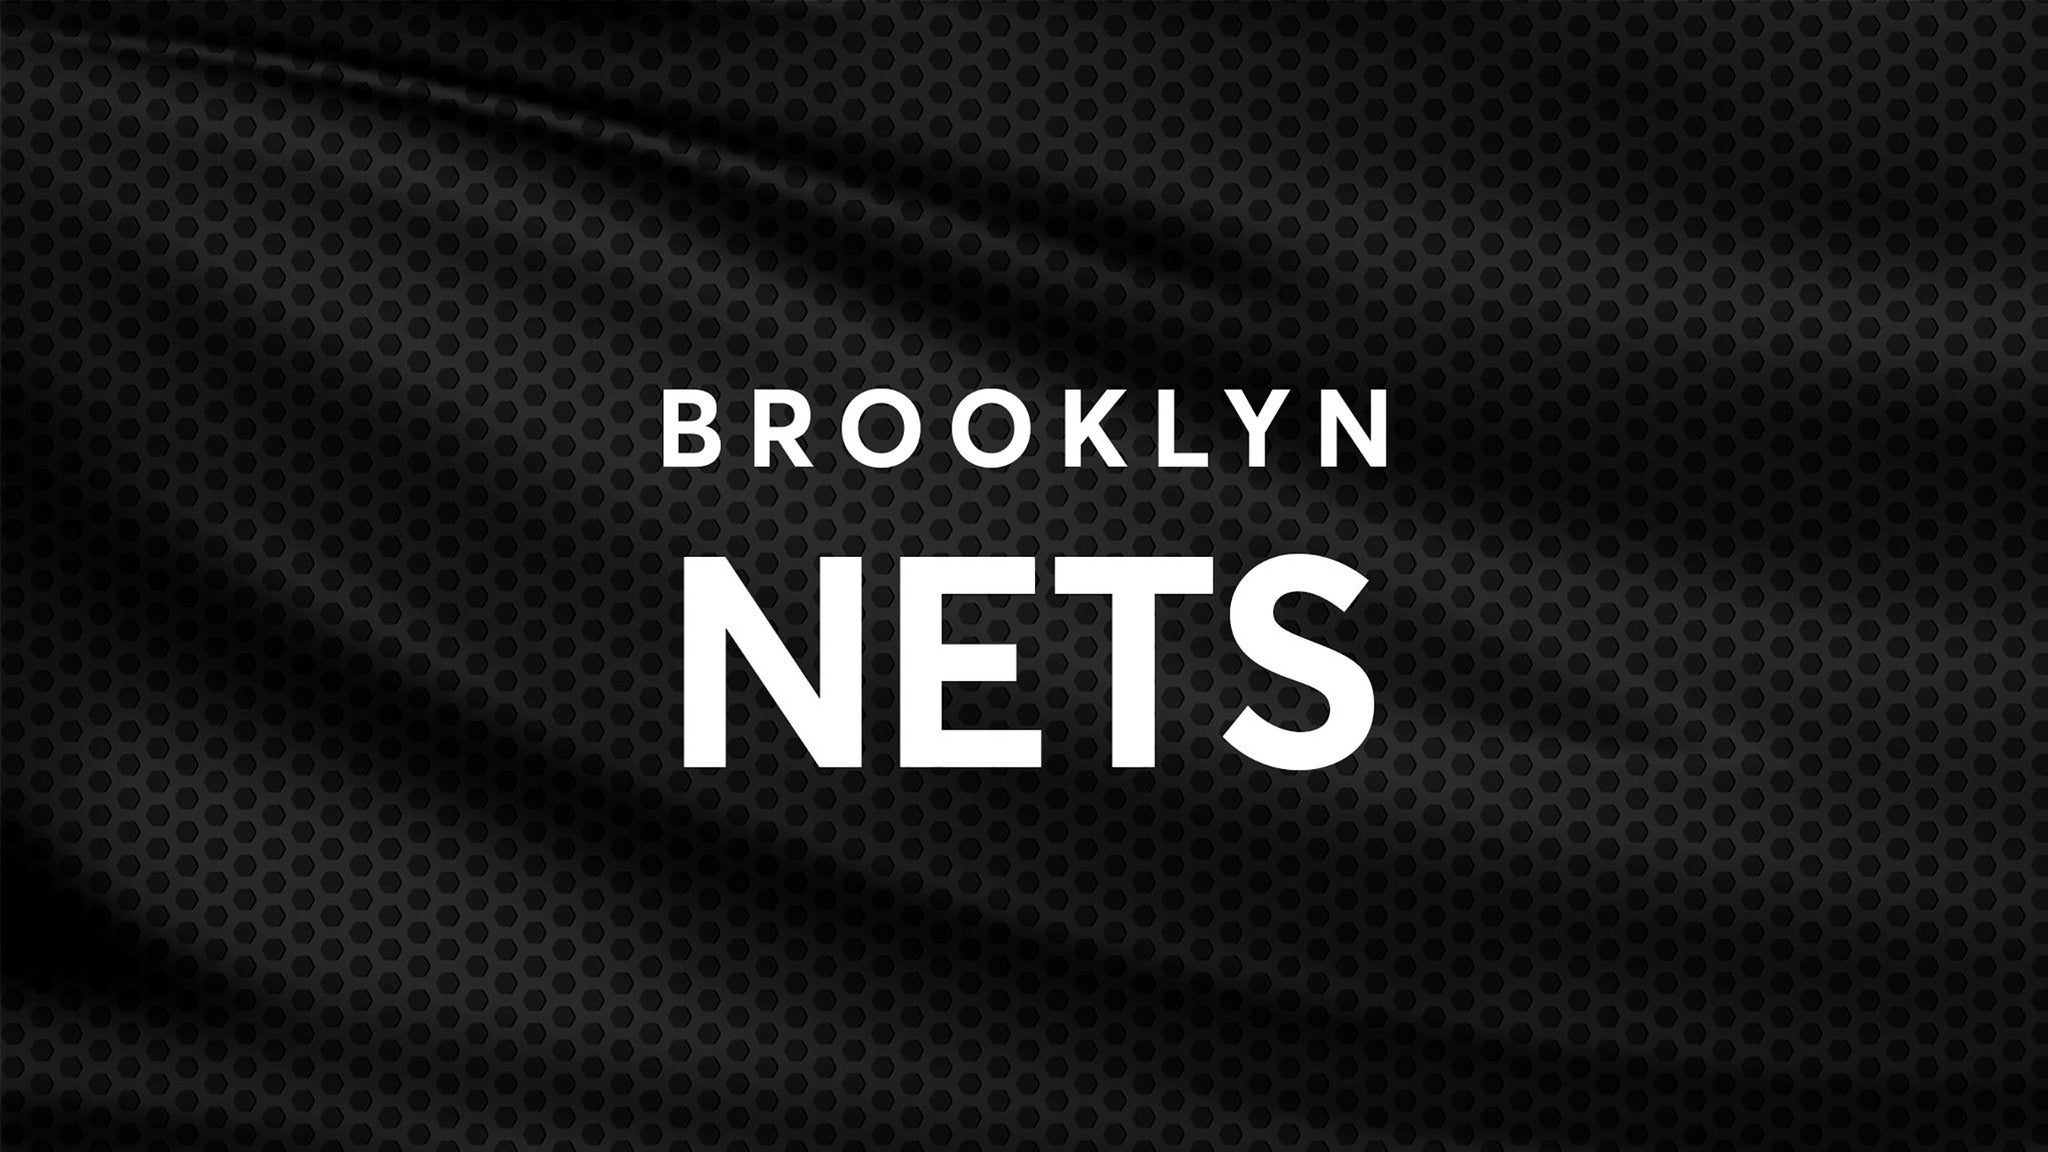 Brooklyn Nets vs. Philadelphia 76ers